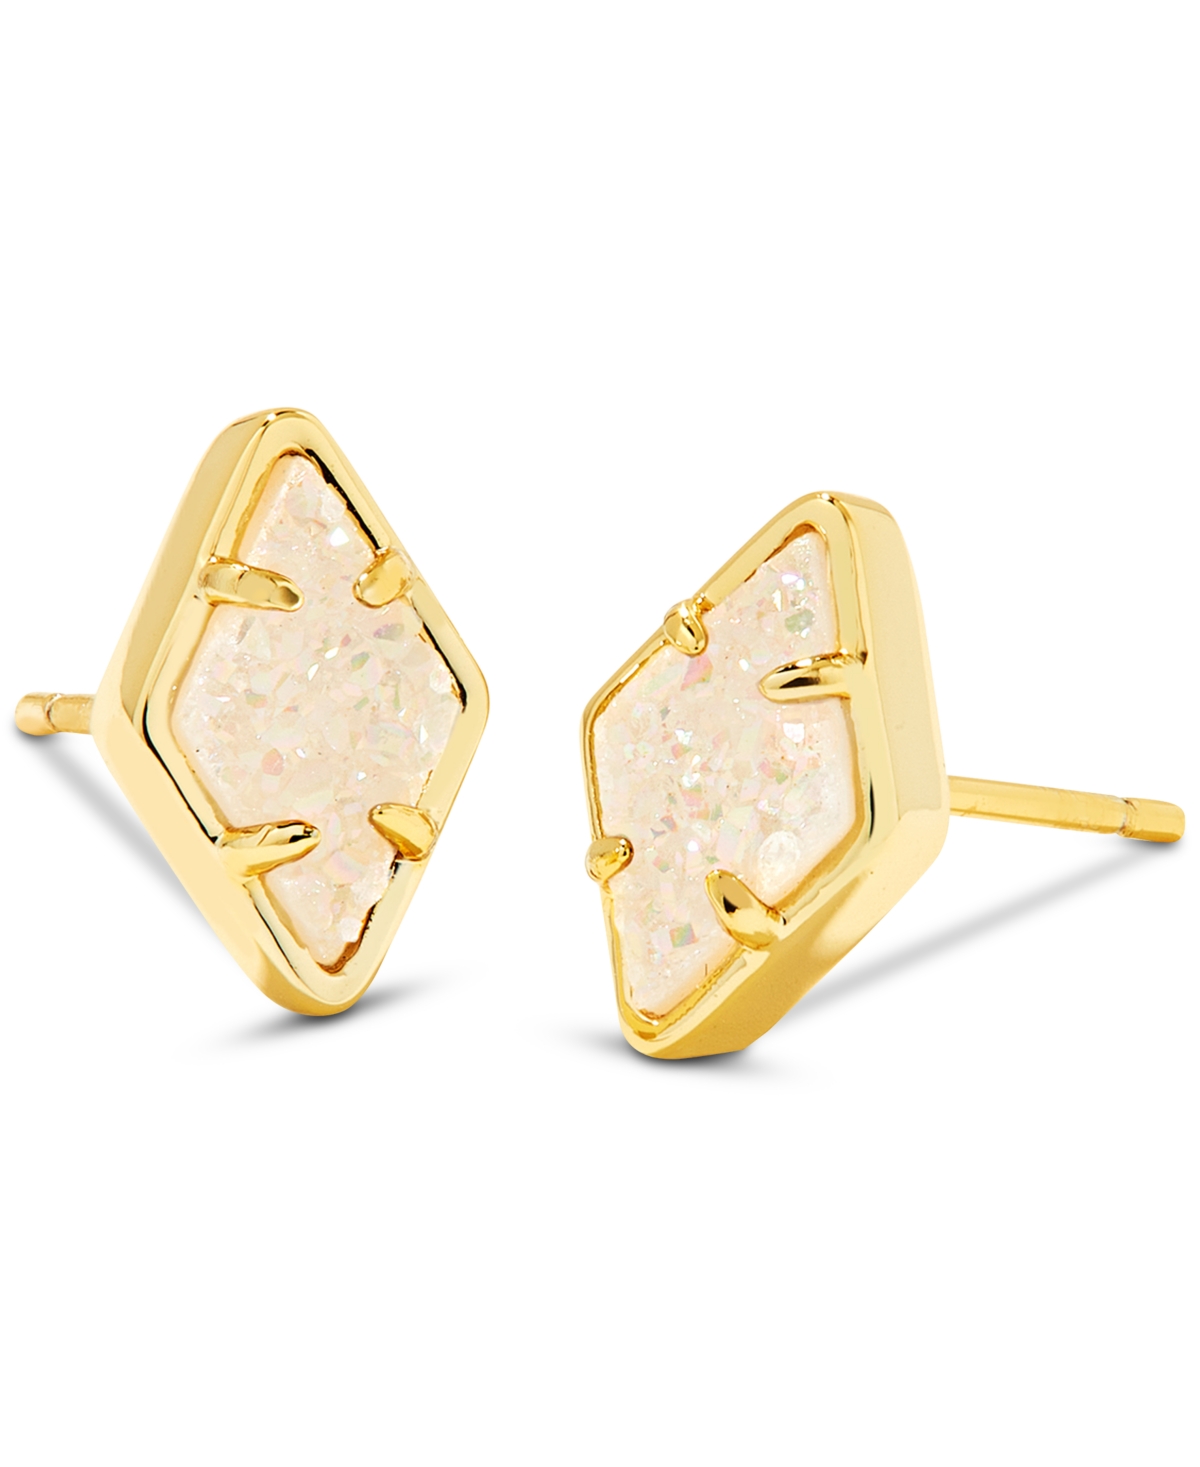 Drusy Stone Diamond-Shape Stud Earrings - GOLD IRIDESCENT DRUSY Sweet